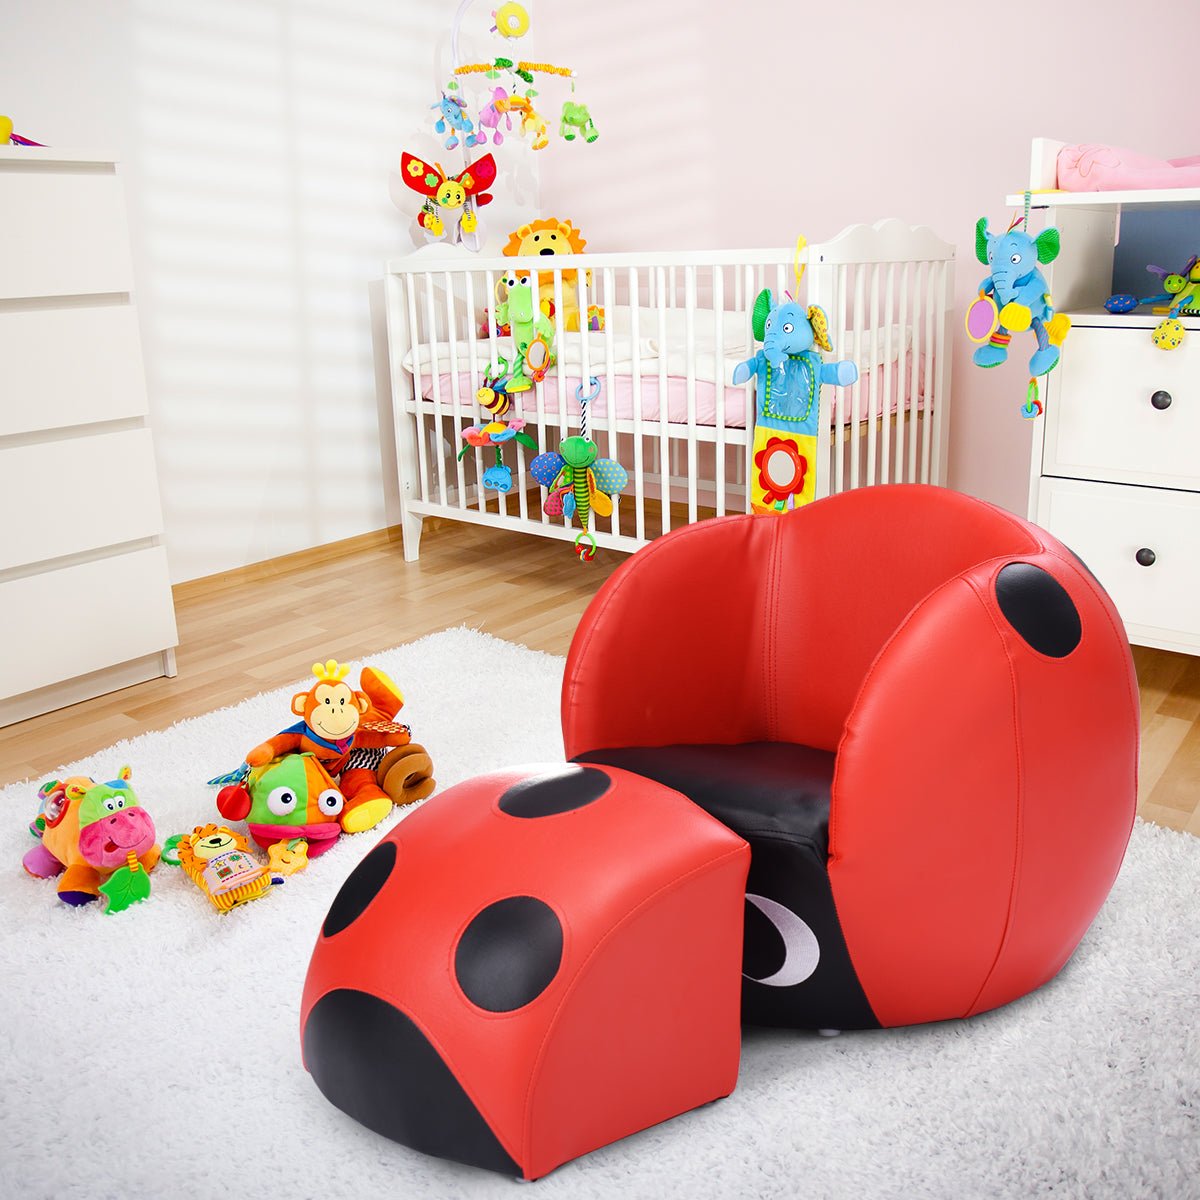 Children's Ladybug Armchair: Waterproof PVC Fabric, Comfortable Leisure Chair